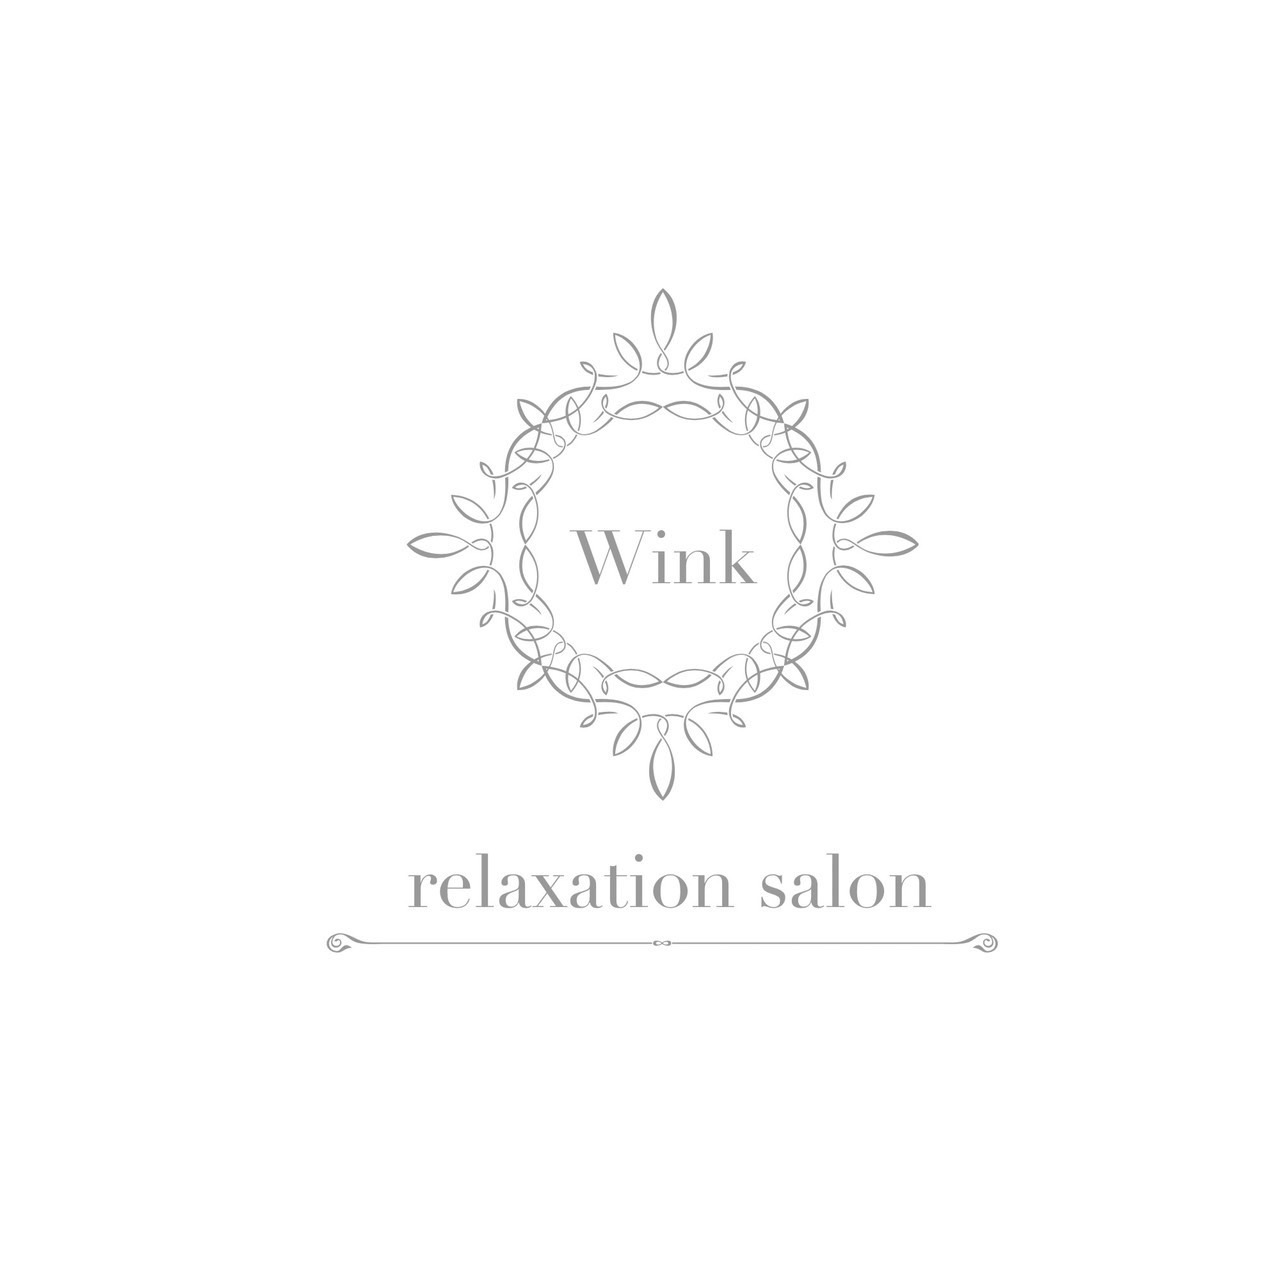 relaxation salon Wink